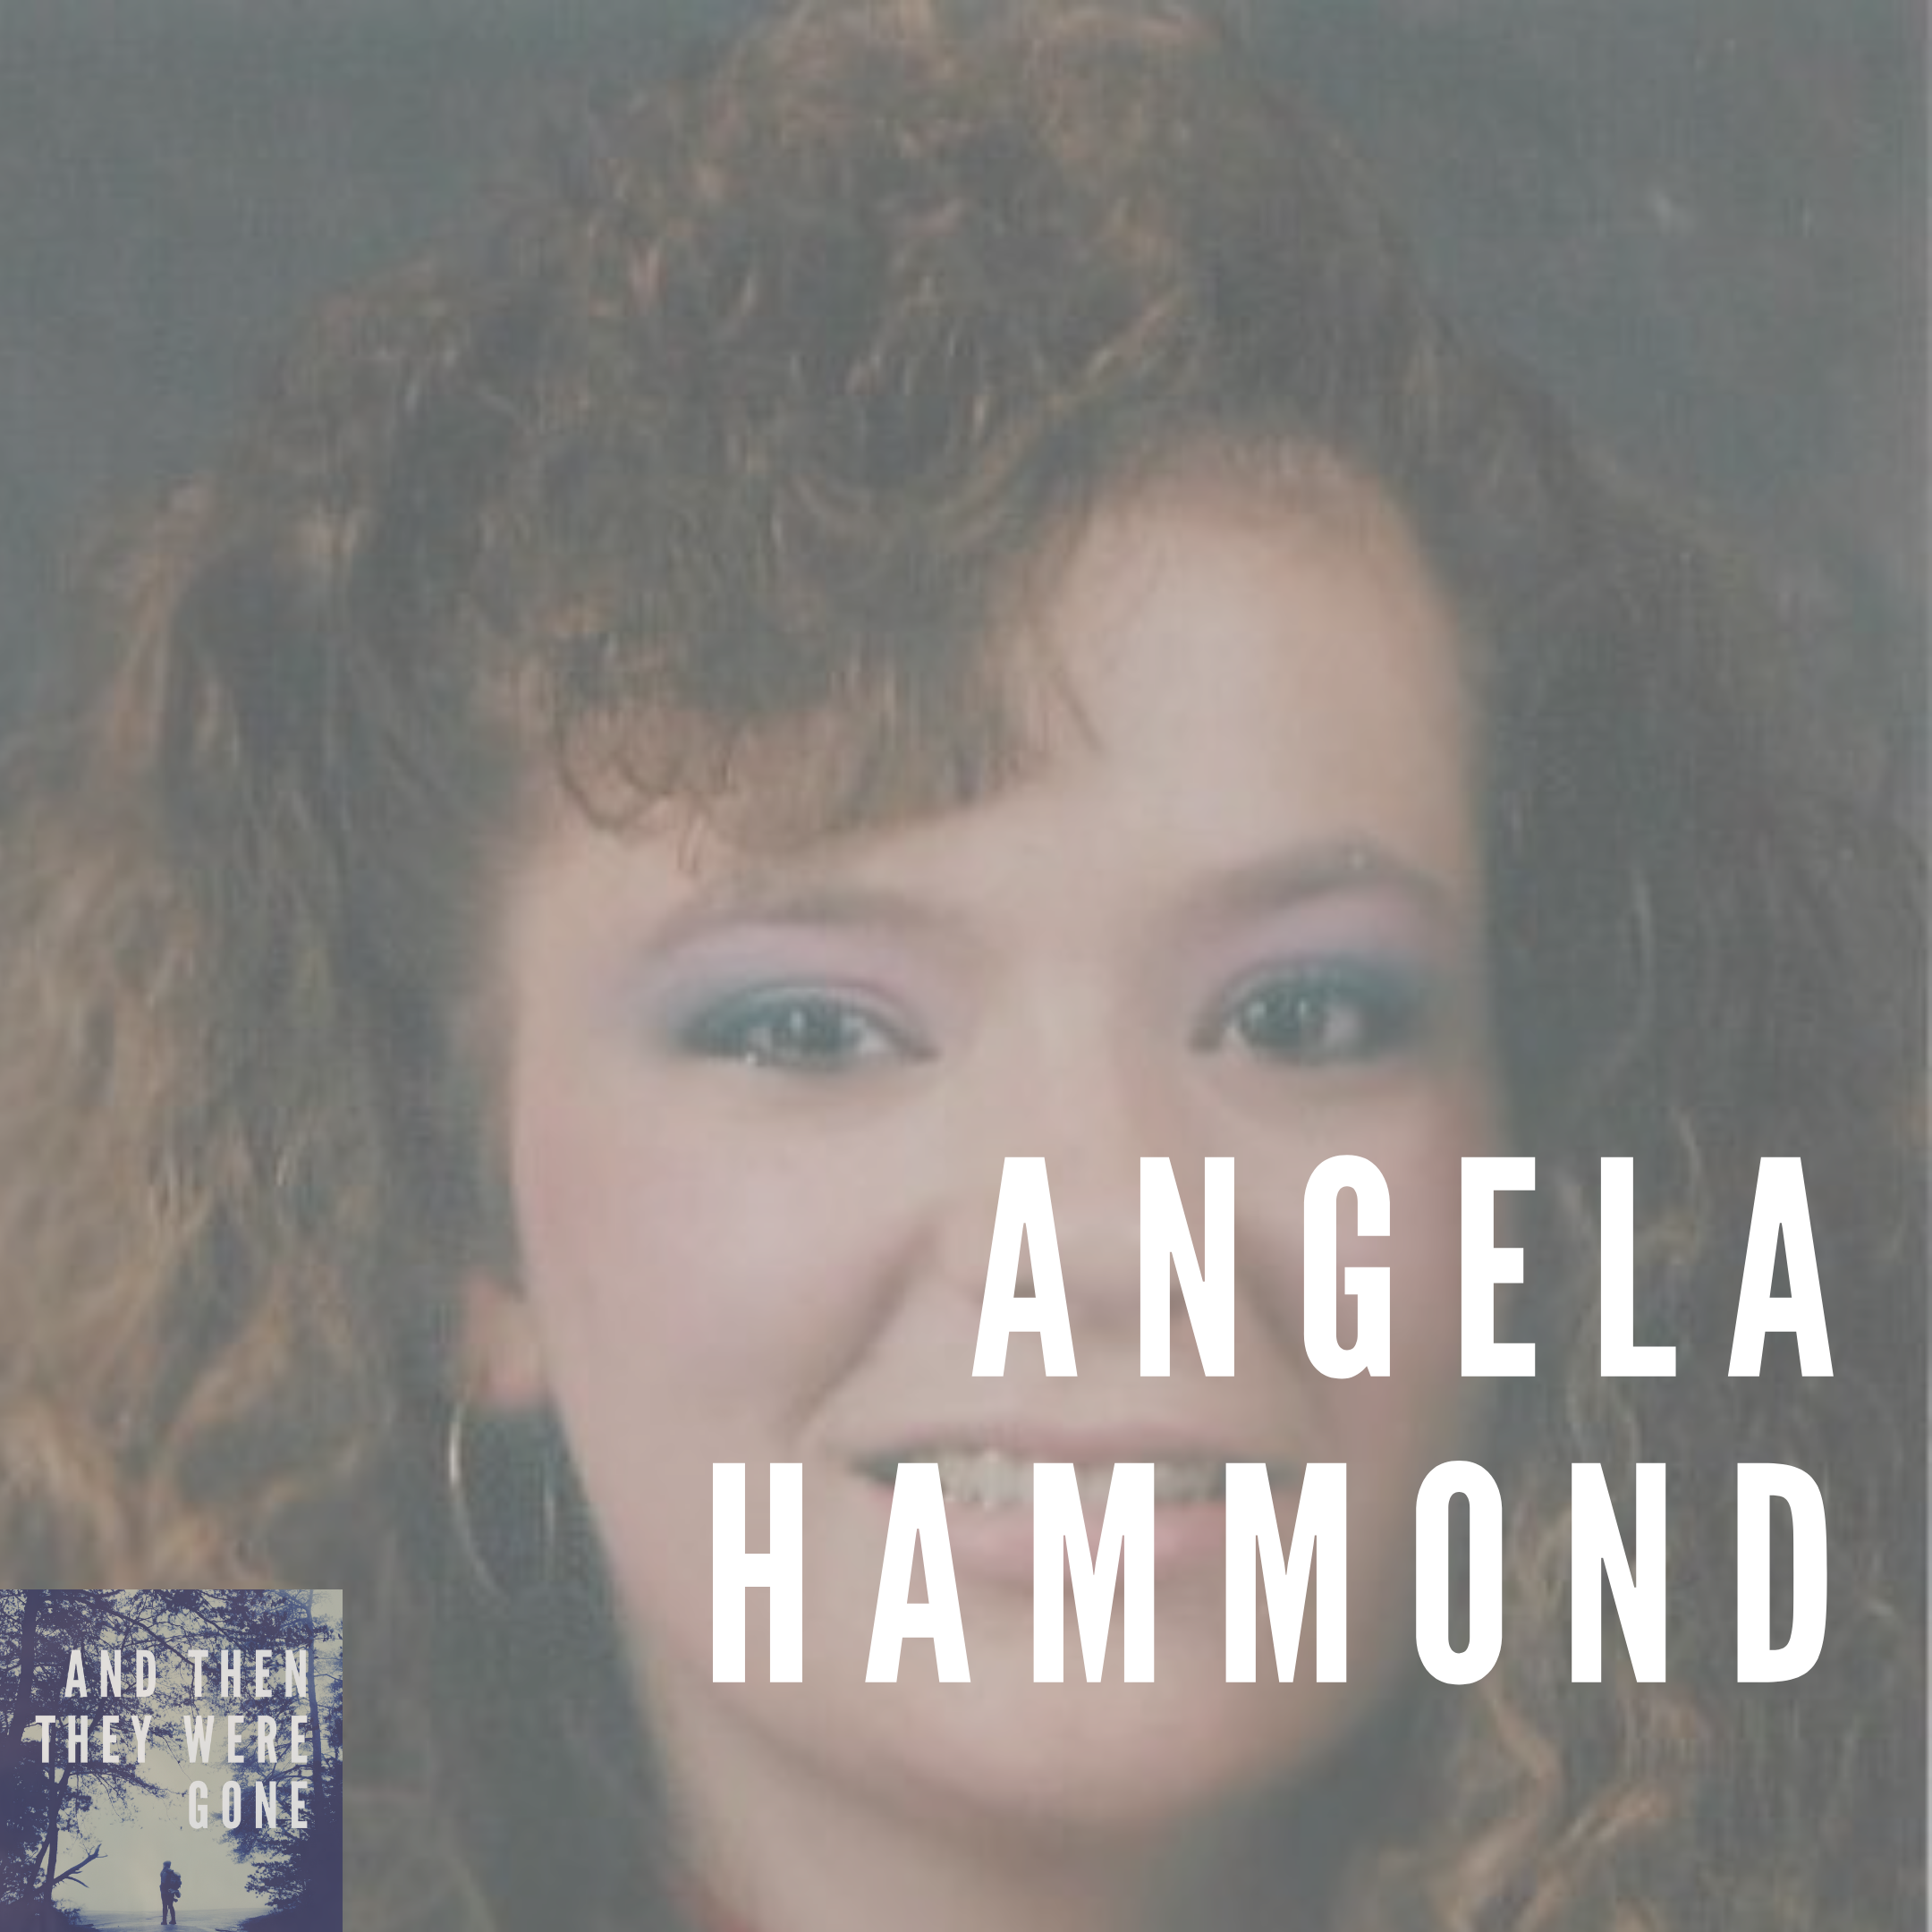 Angela Hammond, missing since April 4, 1991